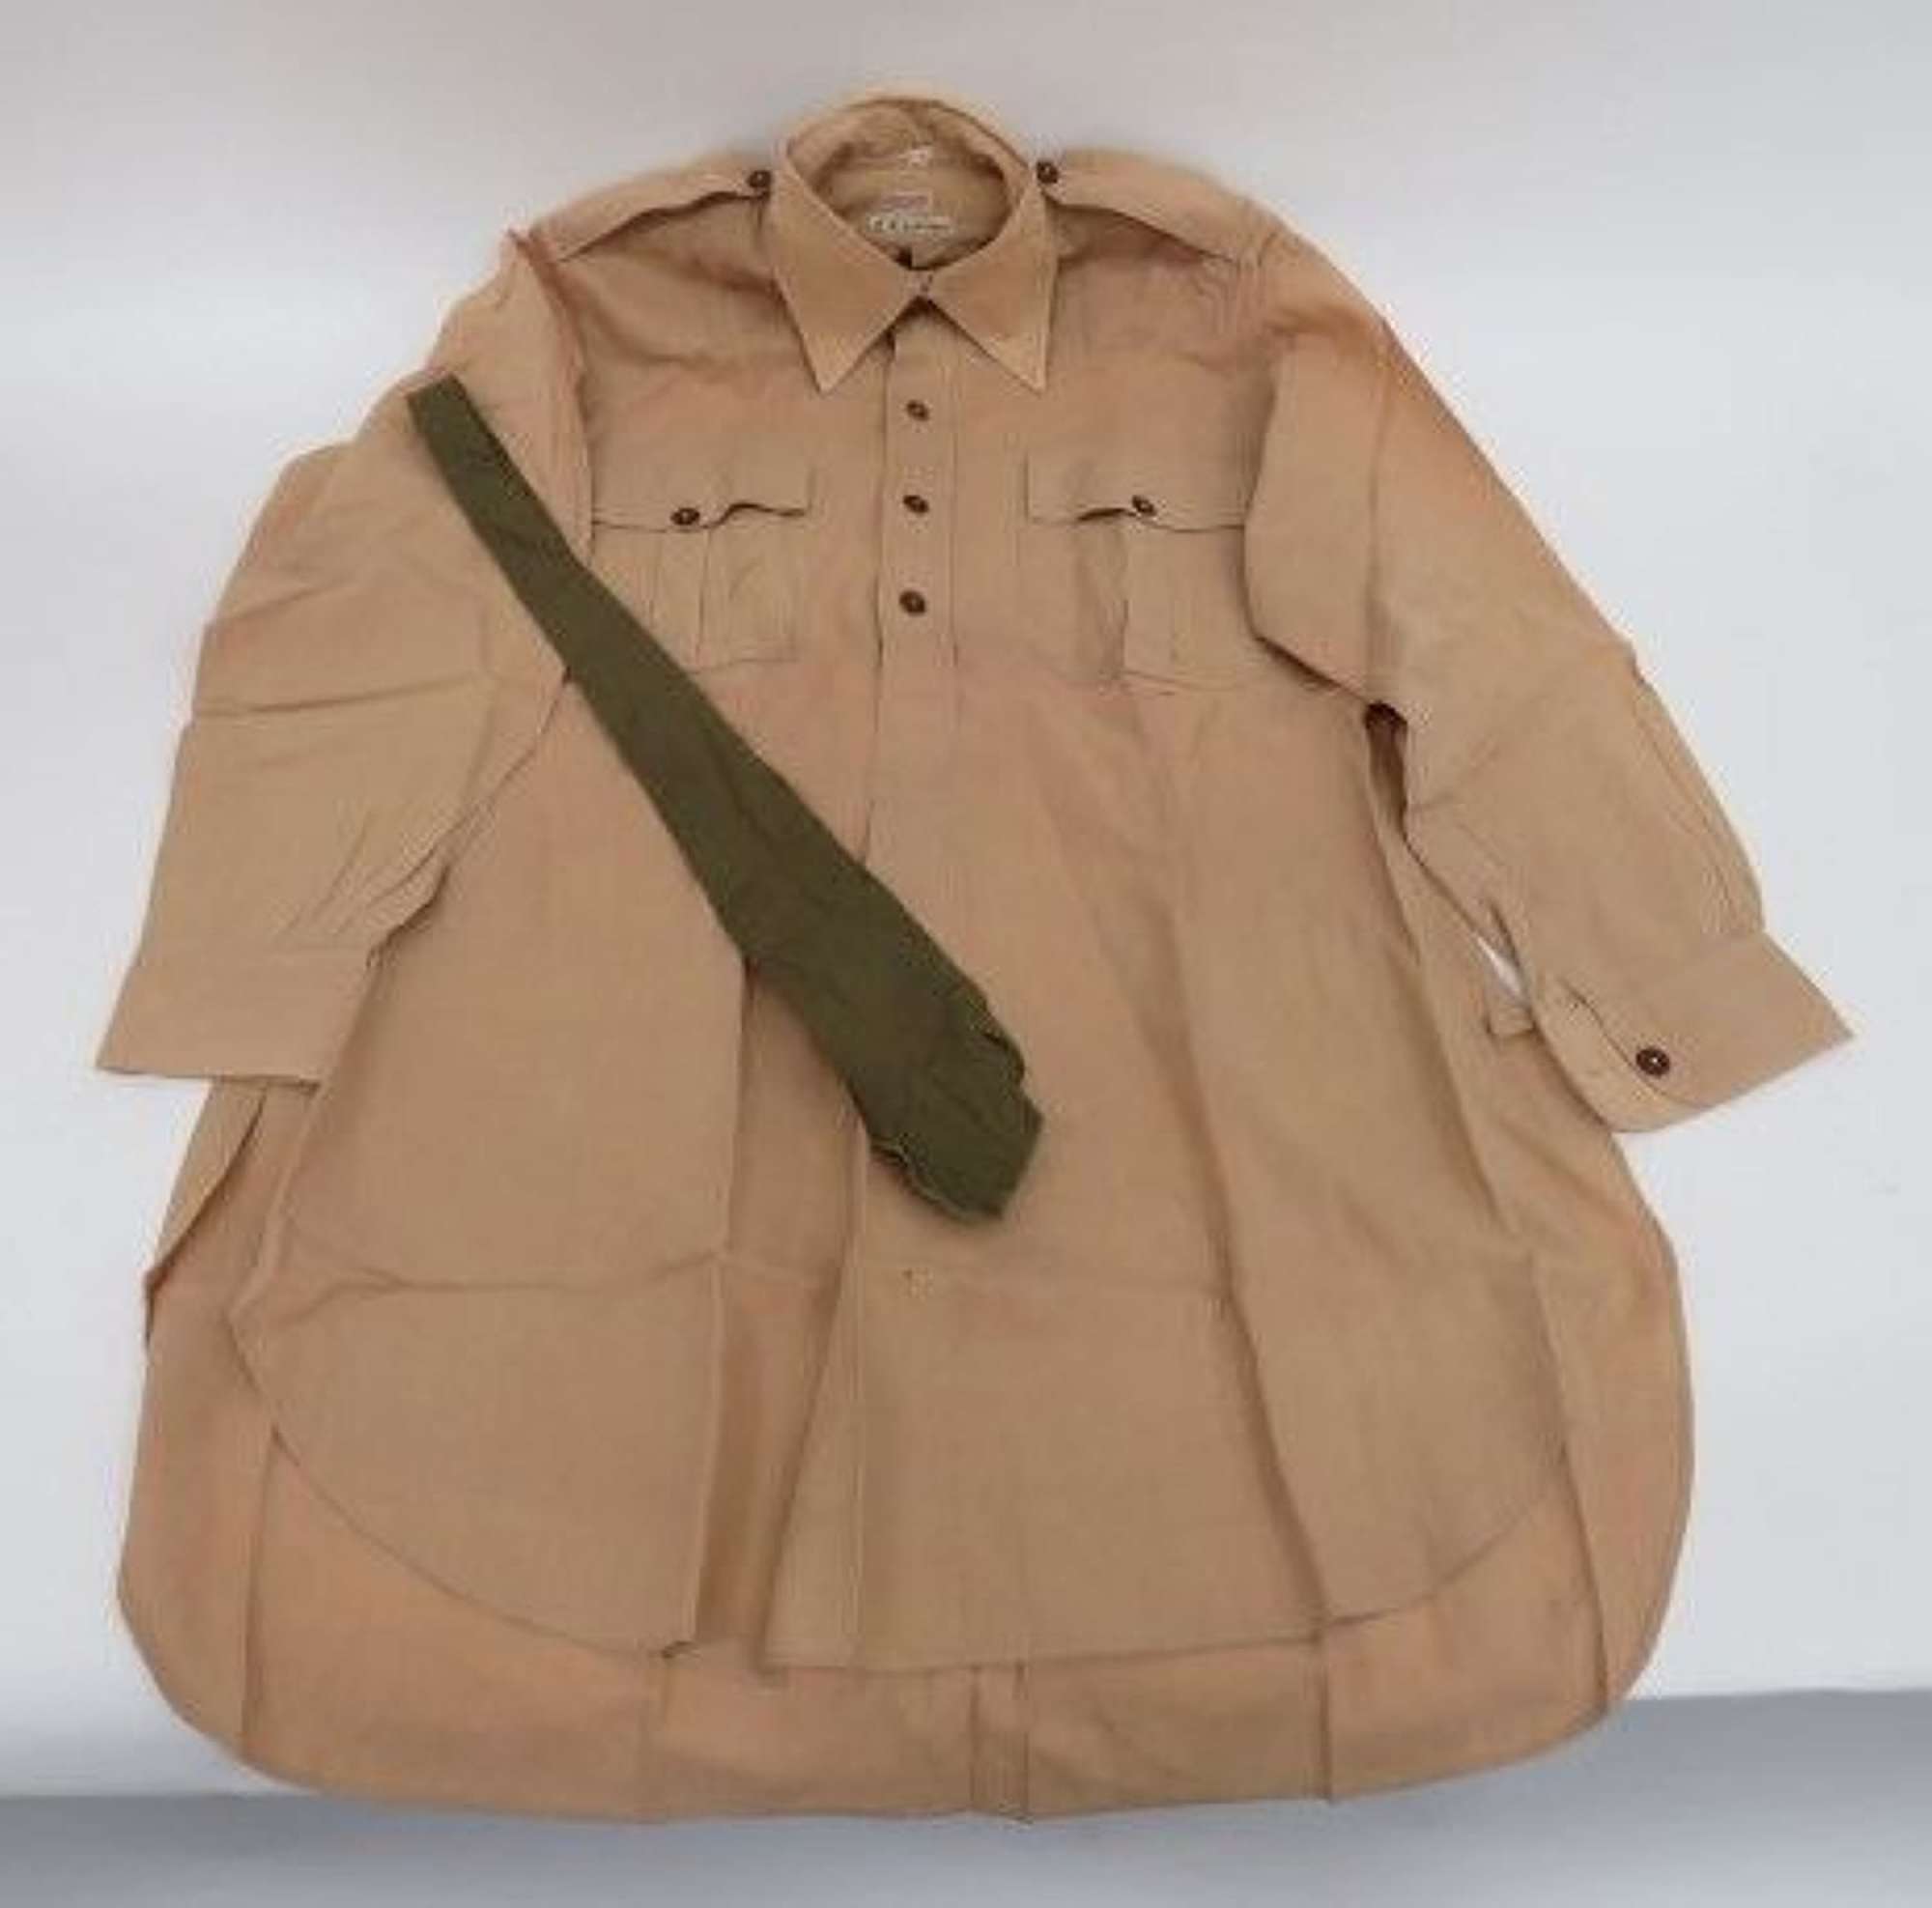 Interwar Officers Shirt and Tie